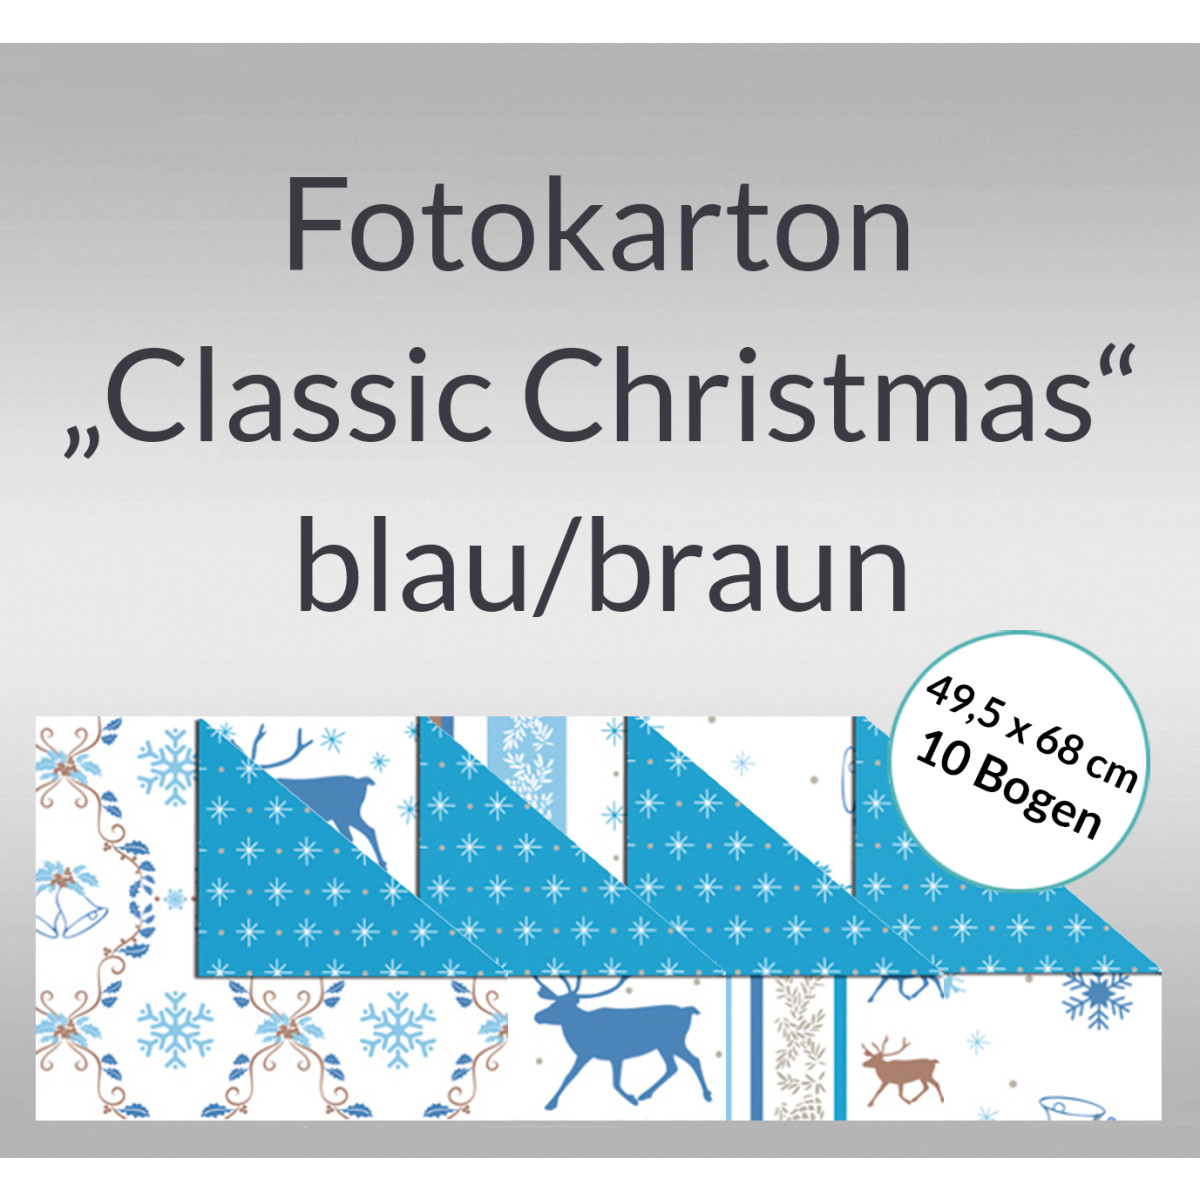 Fotokarton "Classic Christmas" blau/braun 49,5 x 68 cm - 10 Bogen